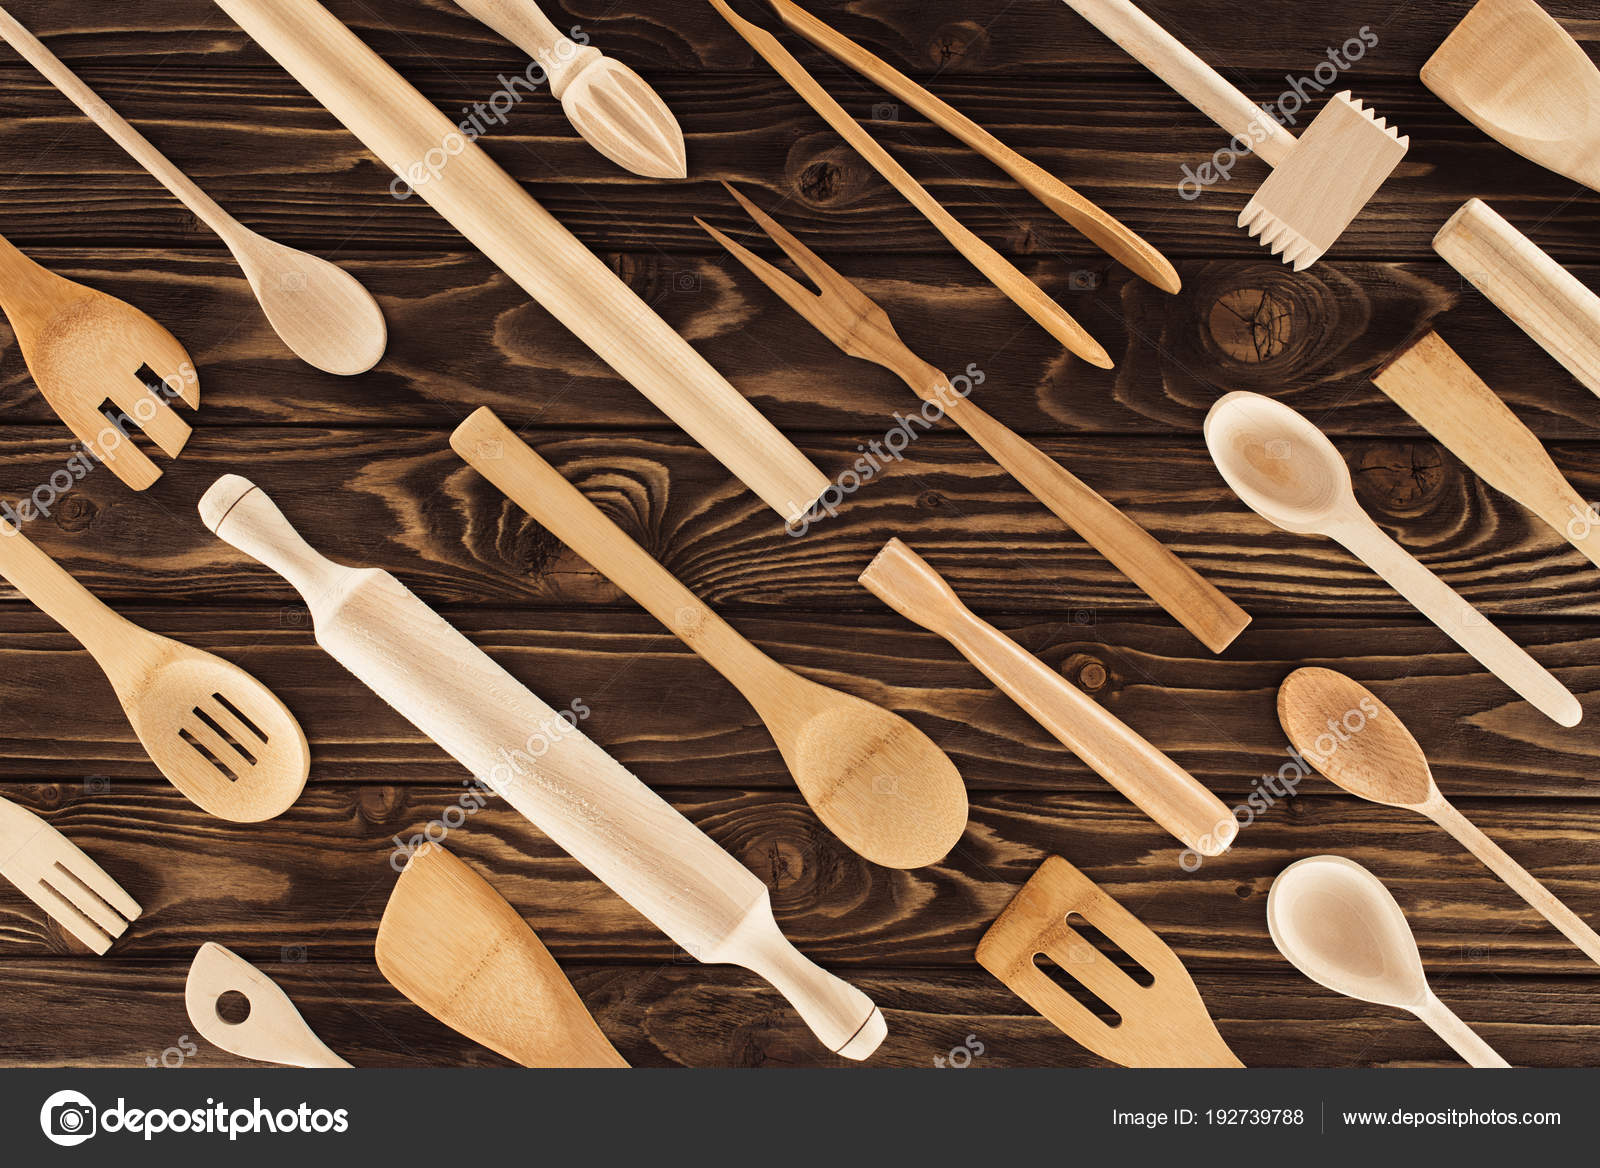 https://st3.depositphotos.com/13324256/19273/i/1600/depositphotos_192739788-stock-photo-top-view-set-kitchen-utensils.jpg